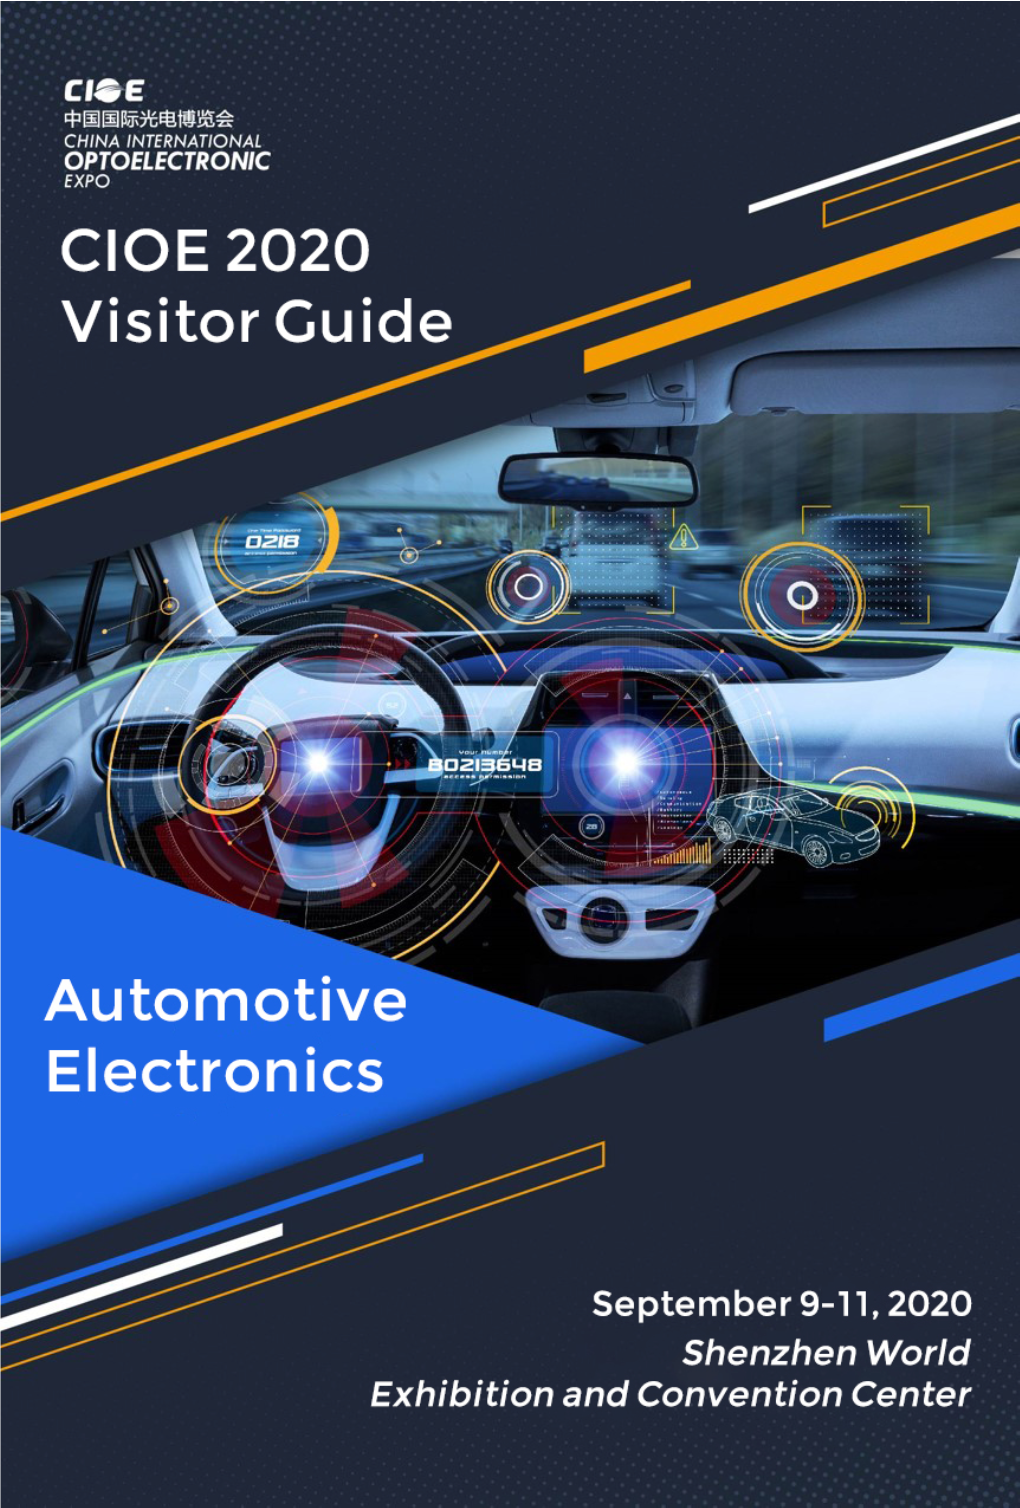 CIOE 2020 Visitor Guide for Automotive Electronics